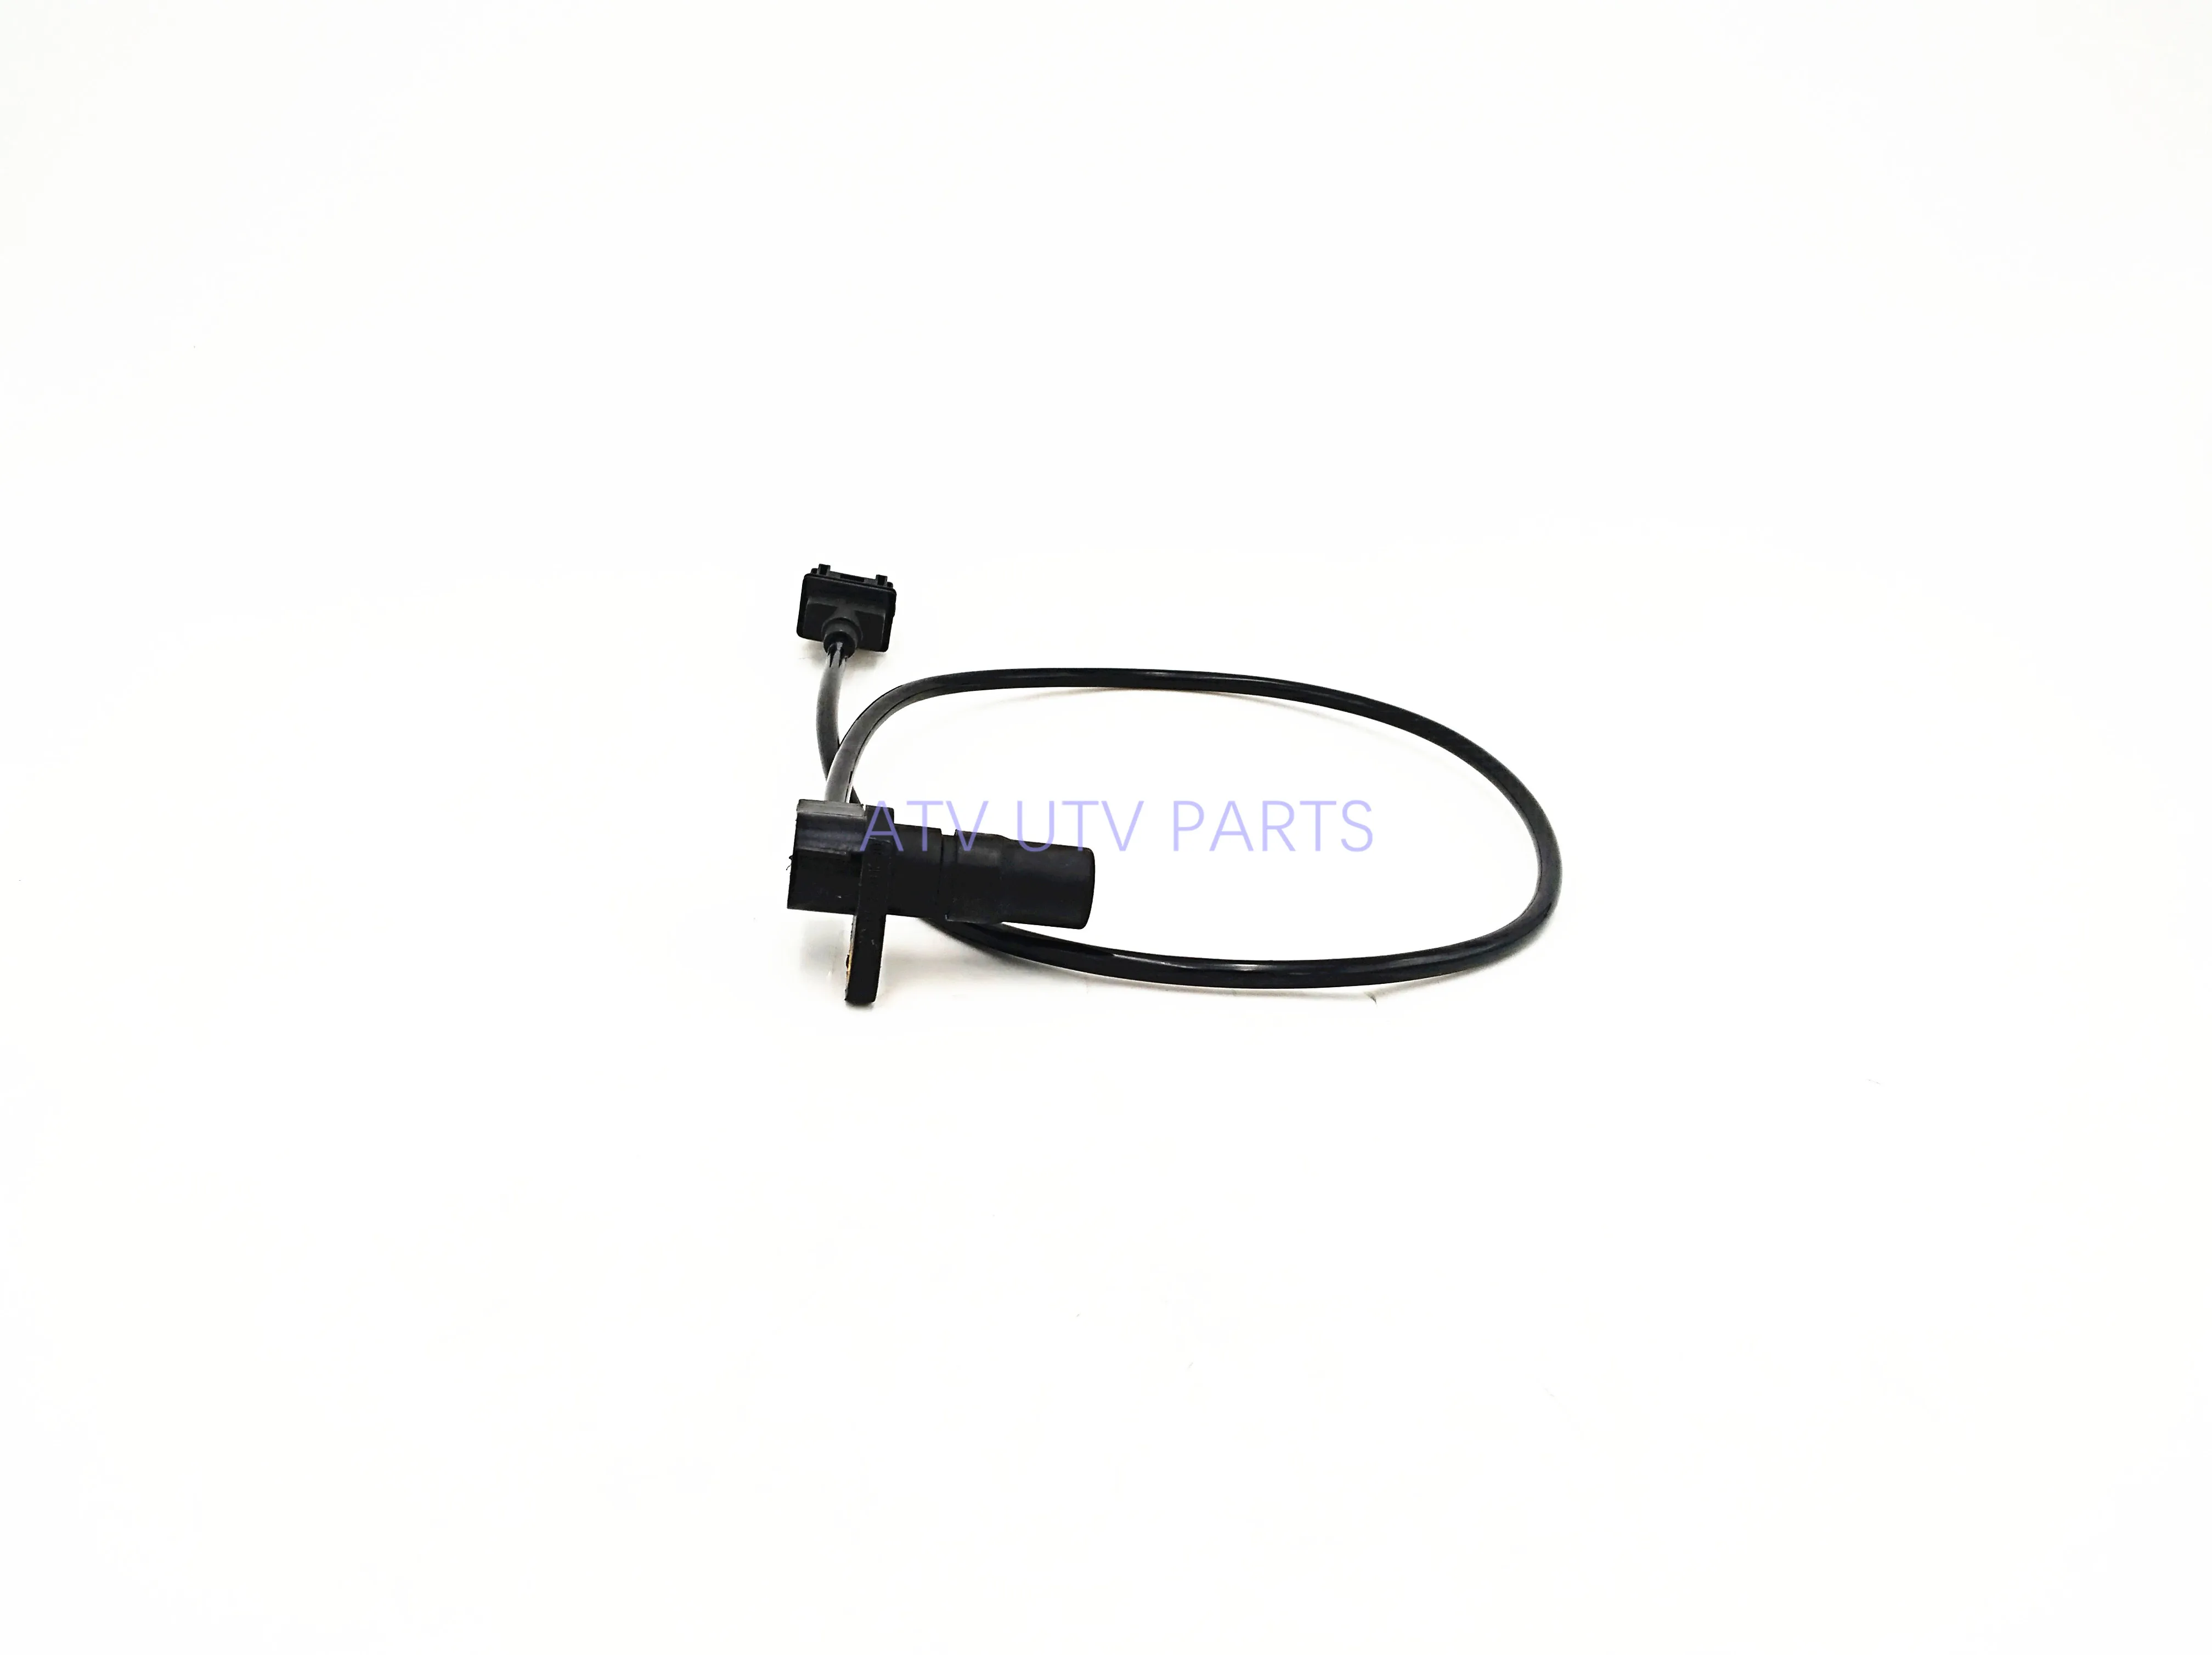 Tacho Sensor Quad Speedo Meter Sensor Kabel Für CF500 CF 500 ATV